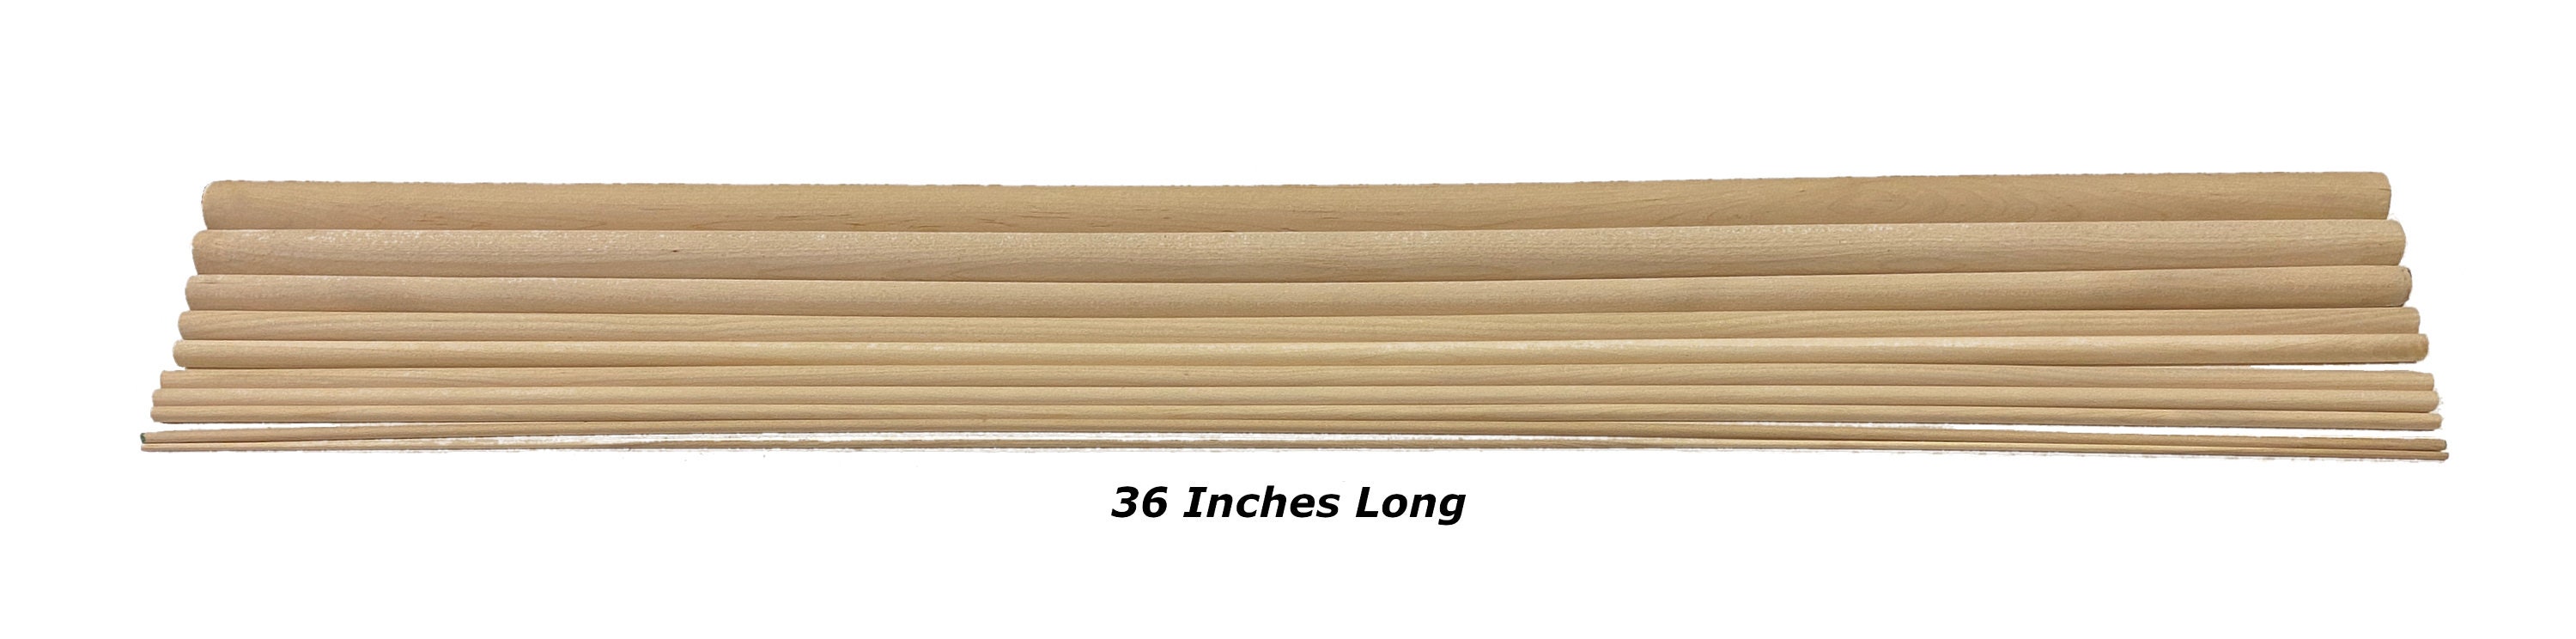 Wood Dowels - 1 Diameter X 48 Long - Imported 1 x 36 wood dowel [#218L-i] -  $7.2900 : Casey's Wood Products, We at Casey's have it all - wood dowels,  blocks